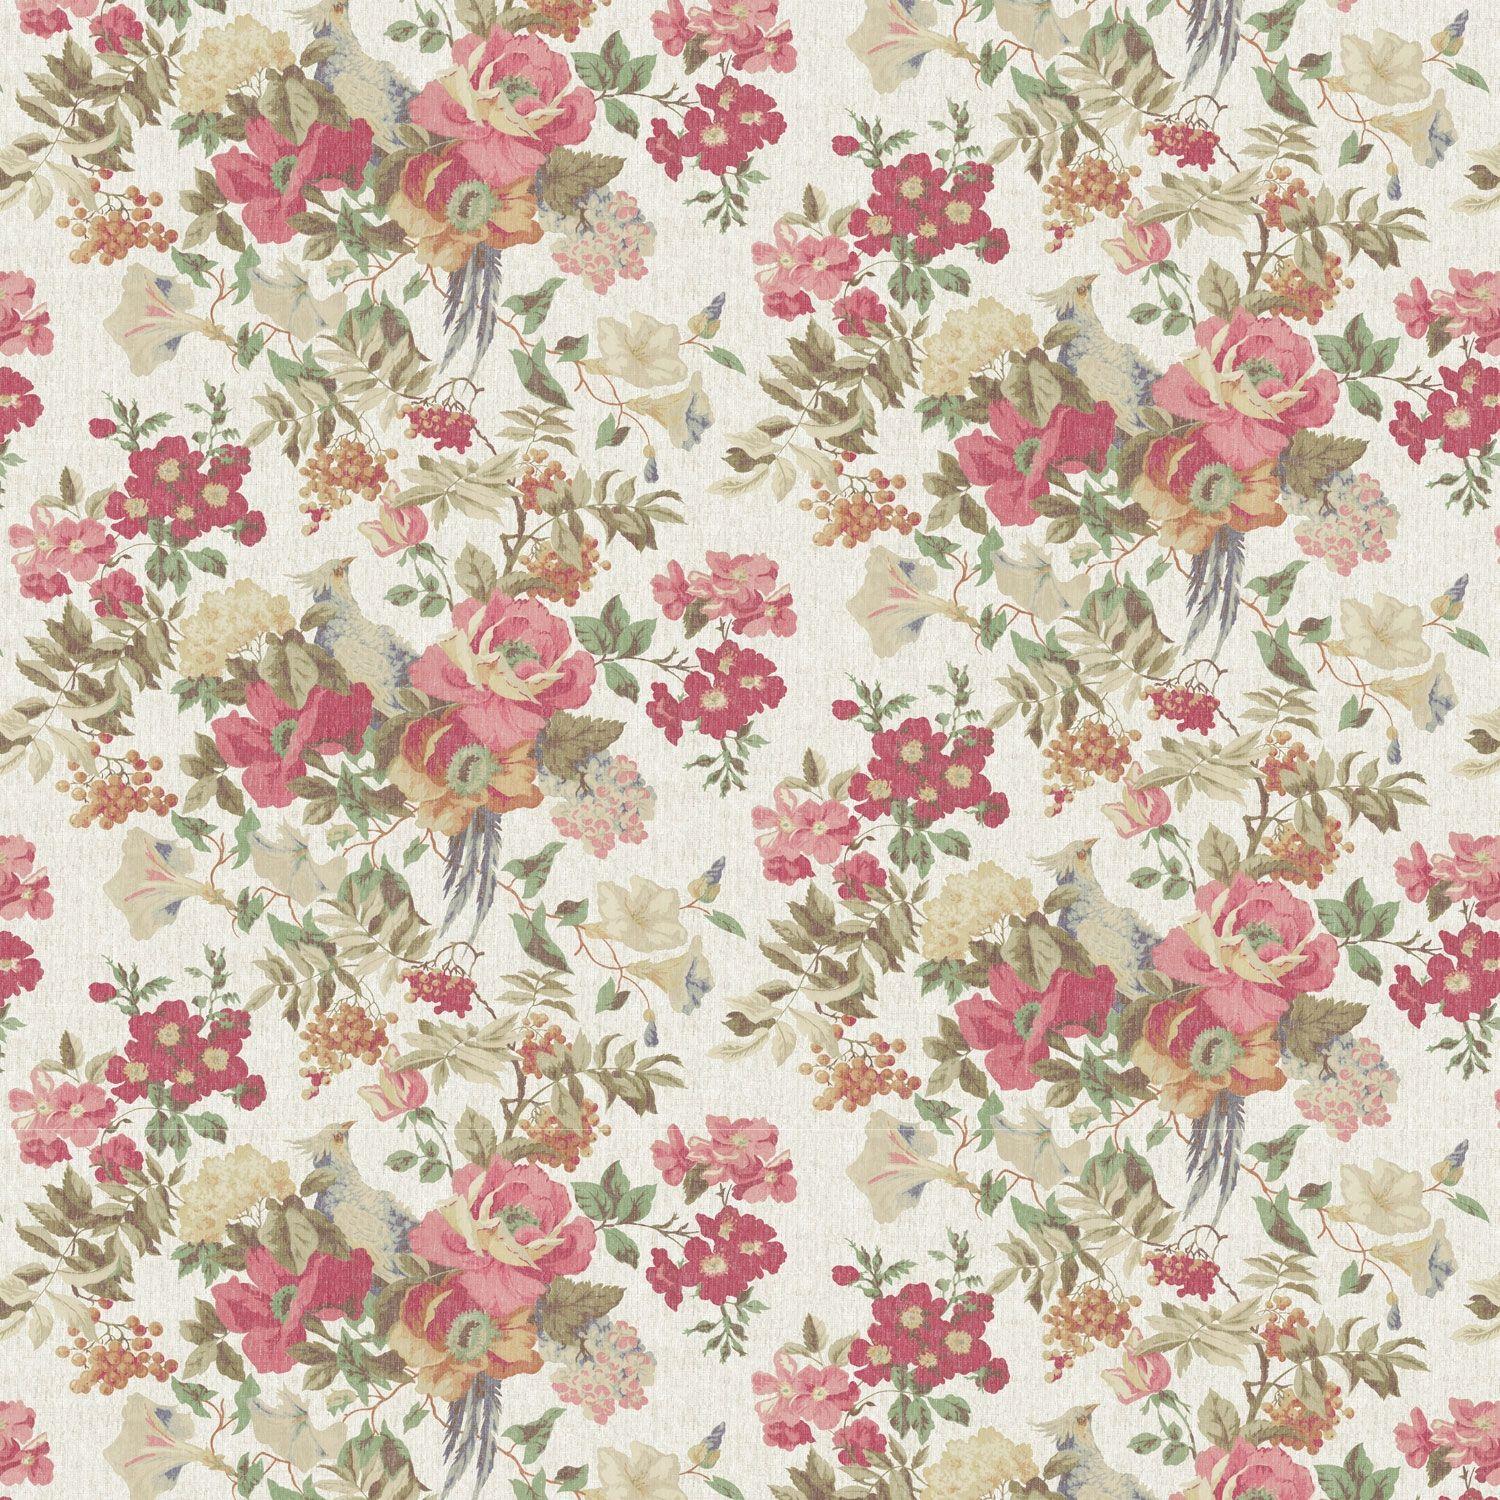 background tumblr flower vintage 7. Background Check All